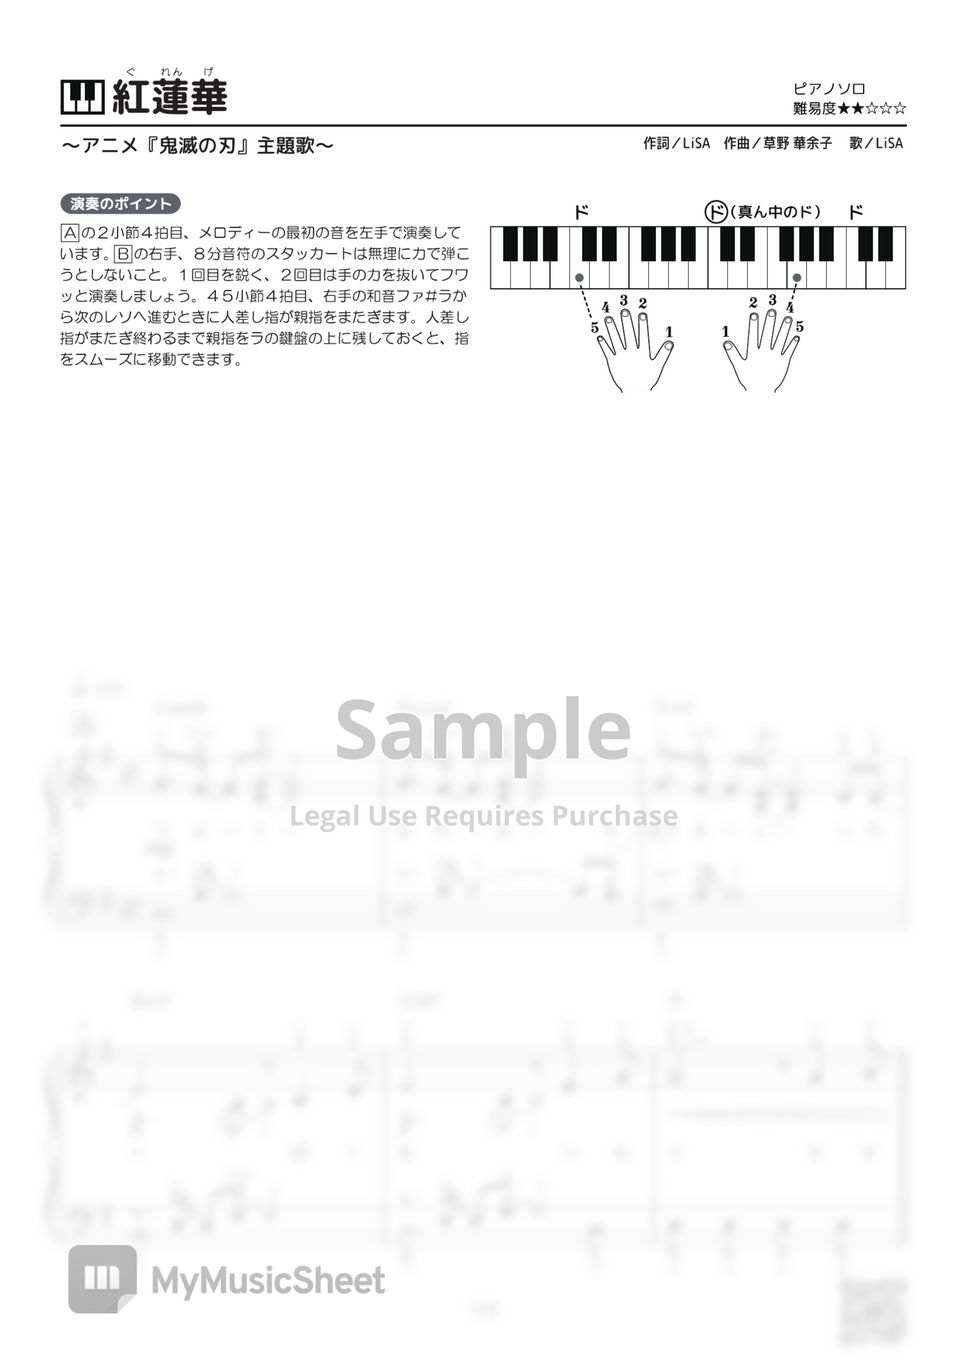 LiSA - Gurenge (Theme song of anime 『Demon Slayer』) by PianoBooks